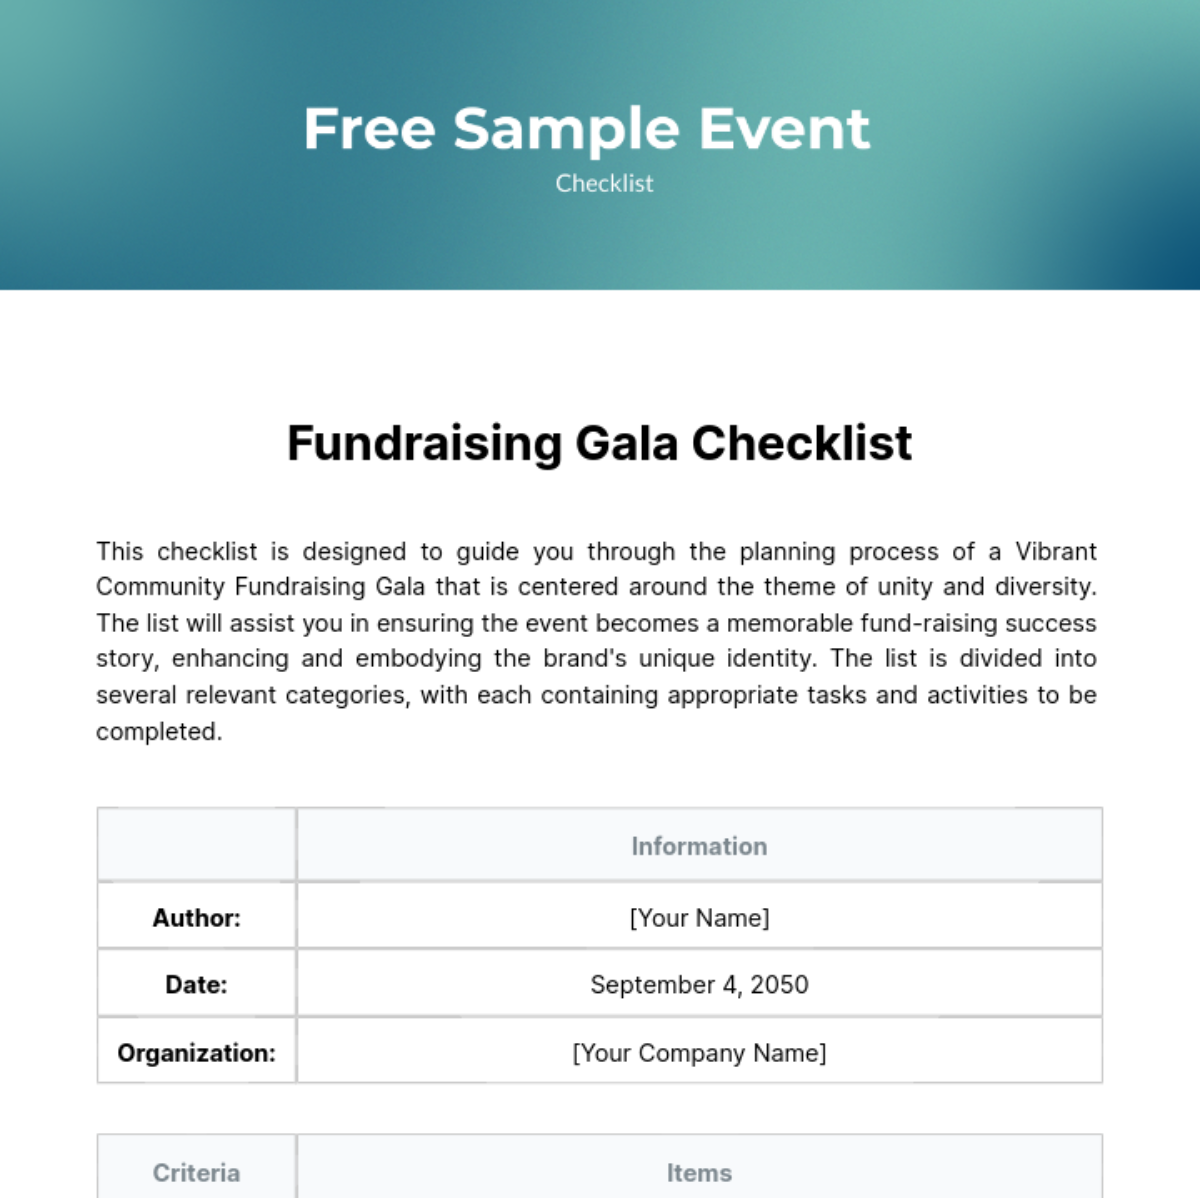 Free Sample Event Checklist Template